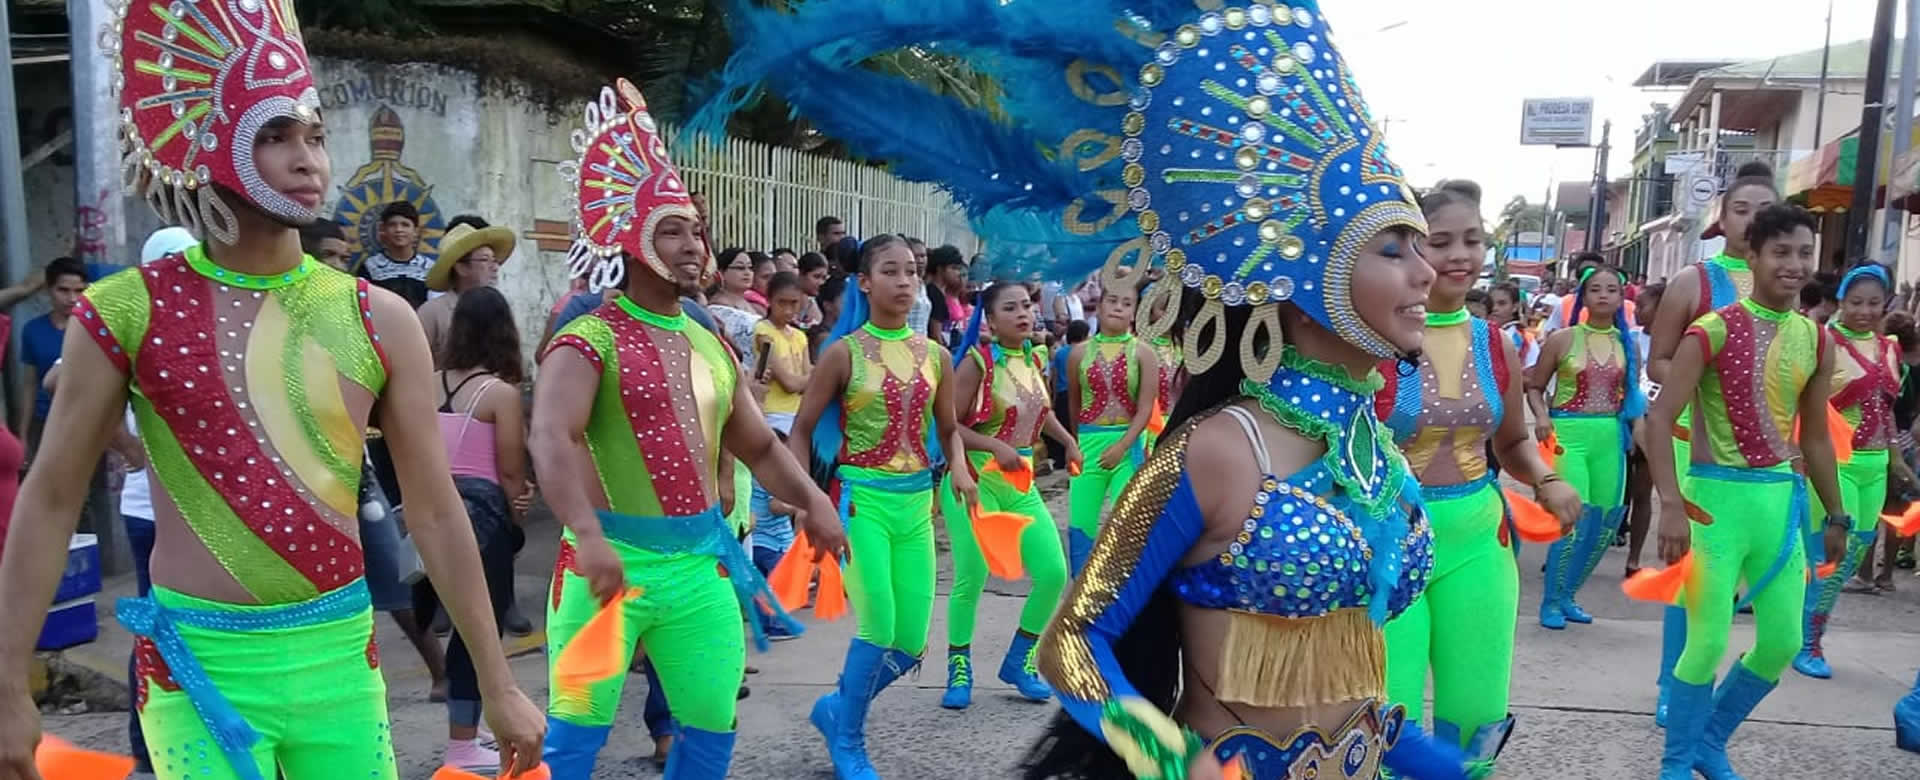 Nicaragua vivirá un fin de semana lleno de actividades culturales